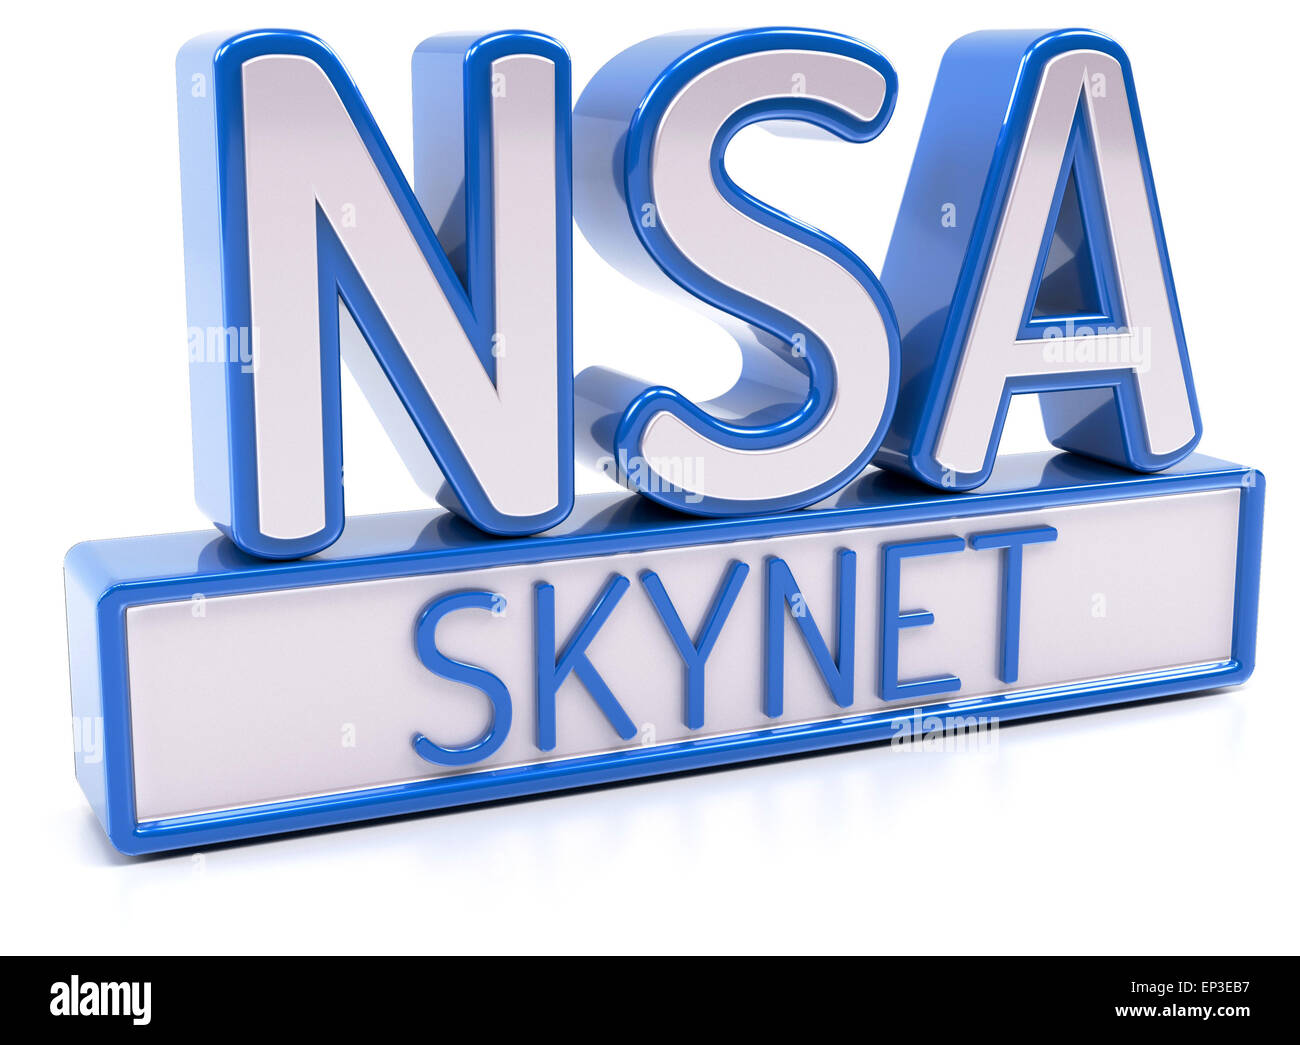 NSA SKYNET - National Security Agency Stockfoto